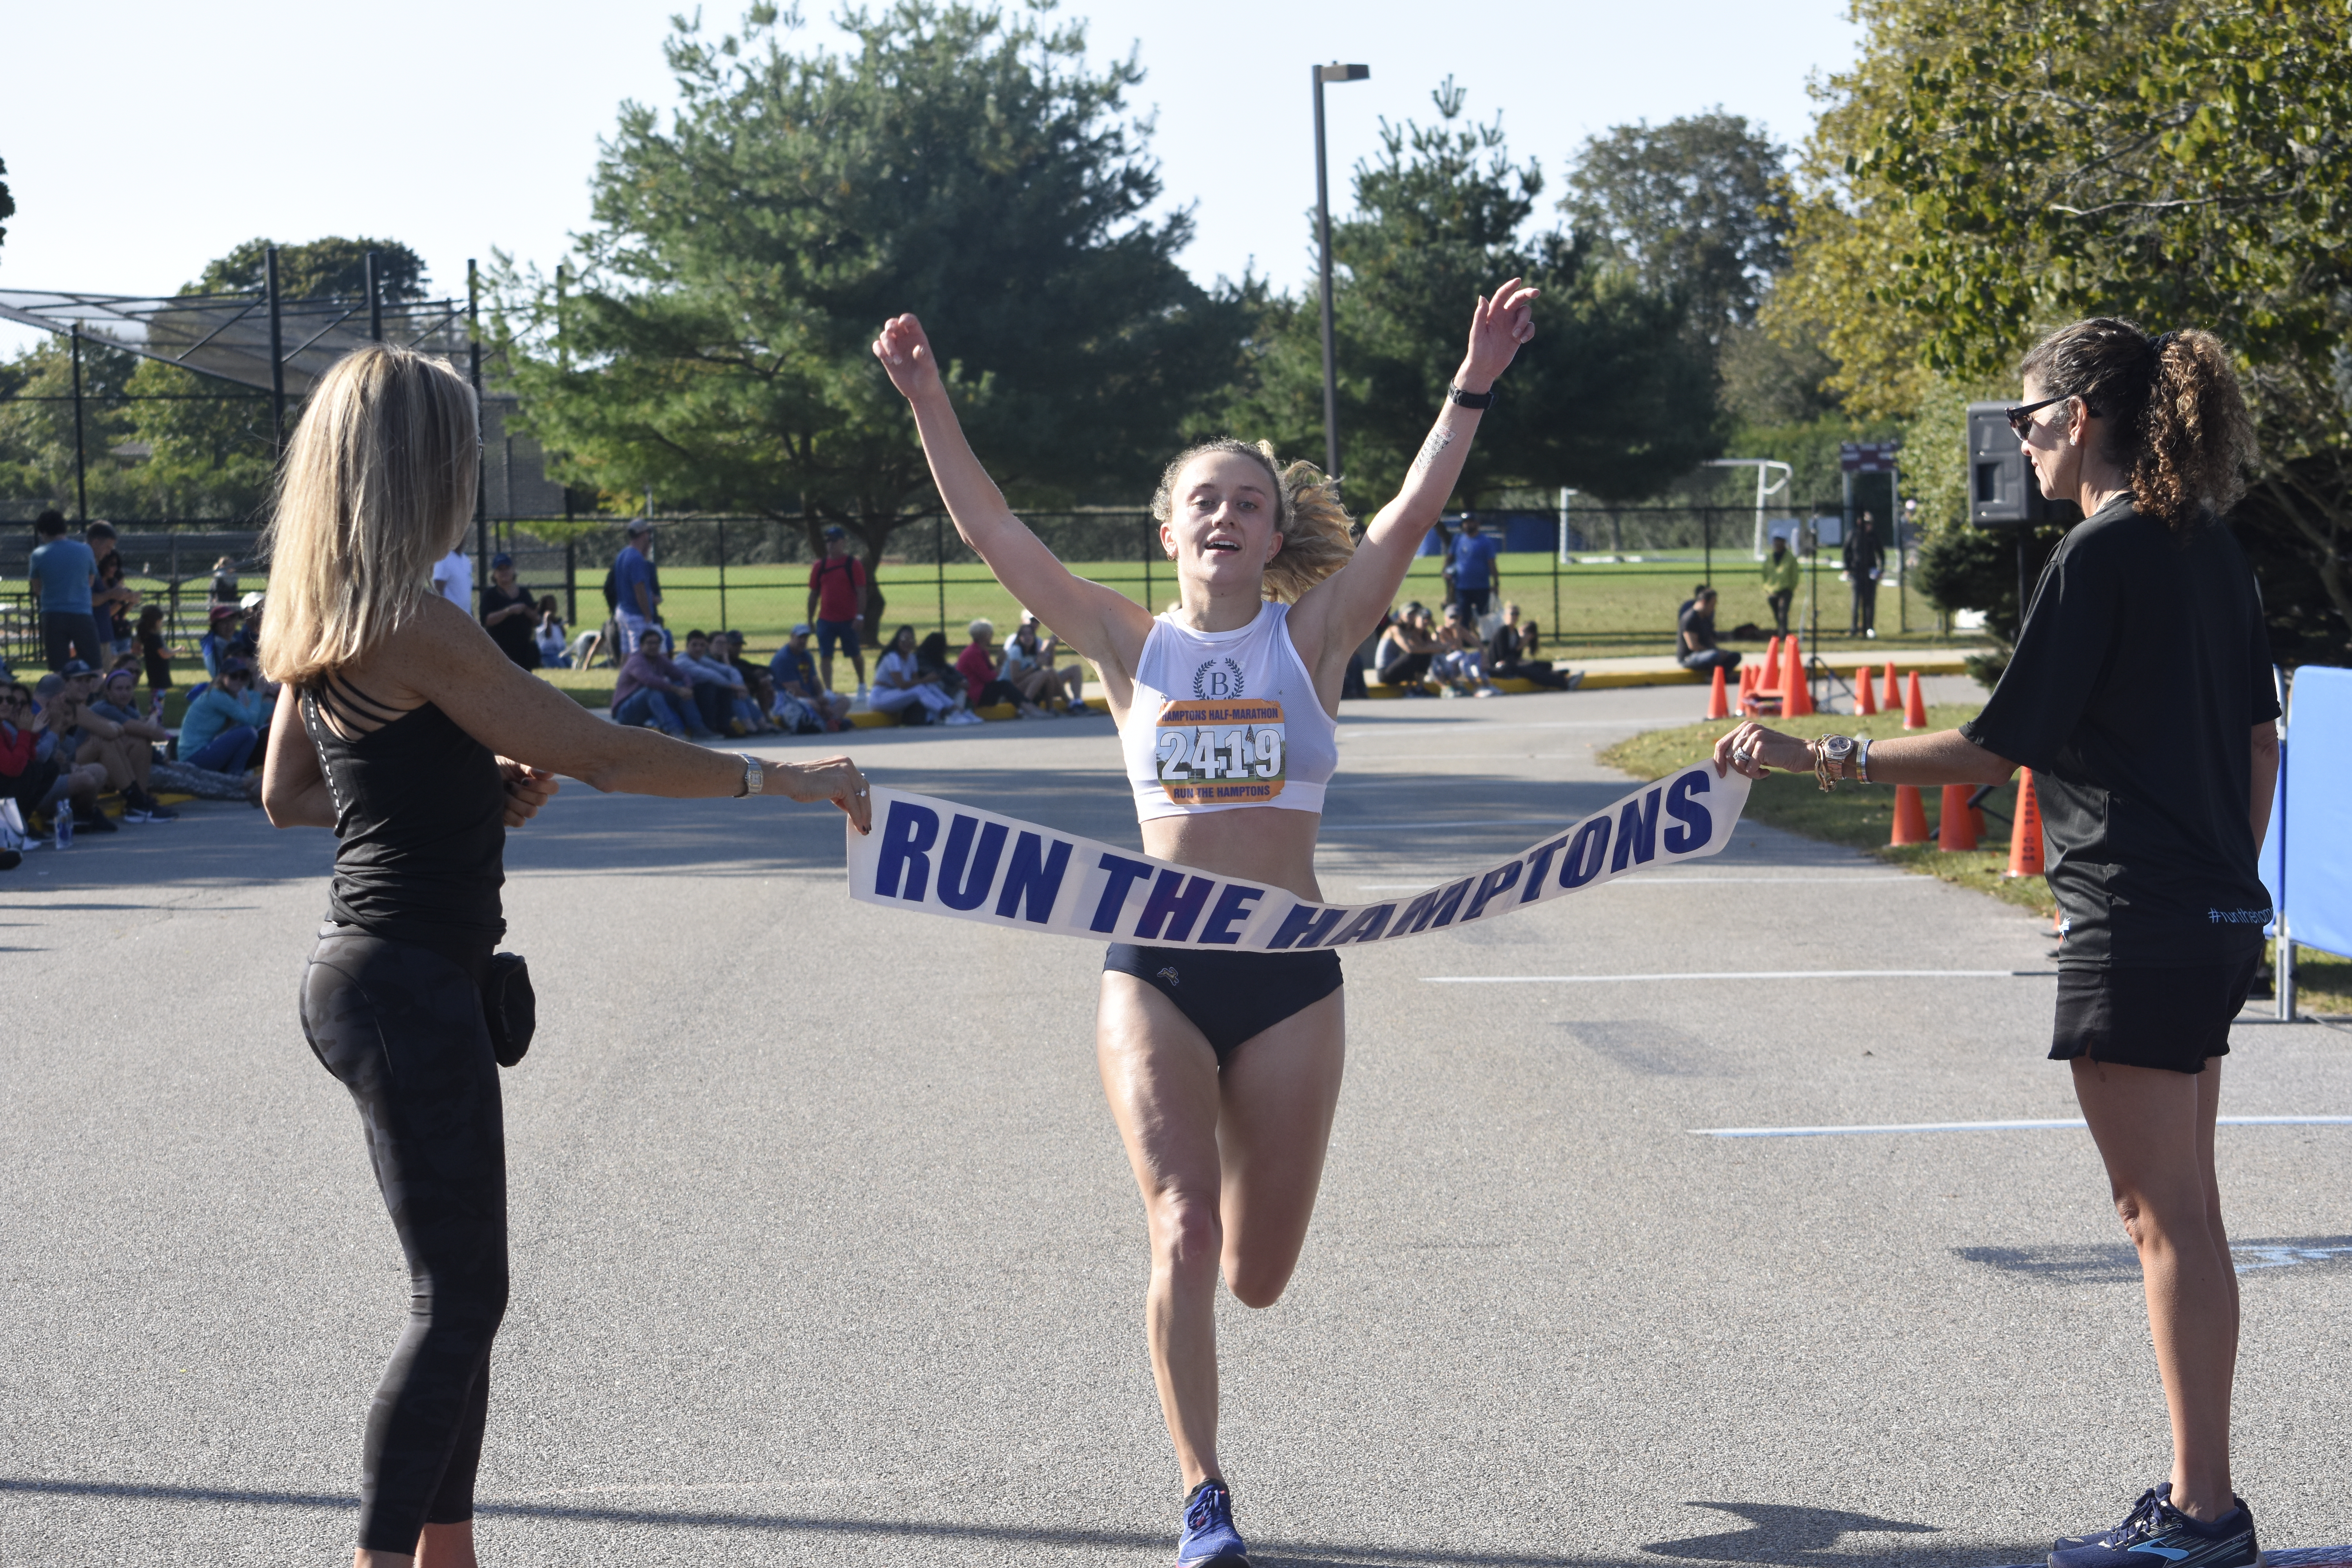 Denali Tietjen, 24, of Brooklyn was the female champion of the half marathon.